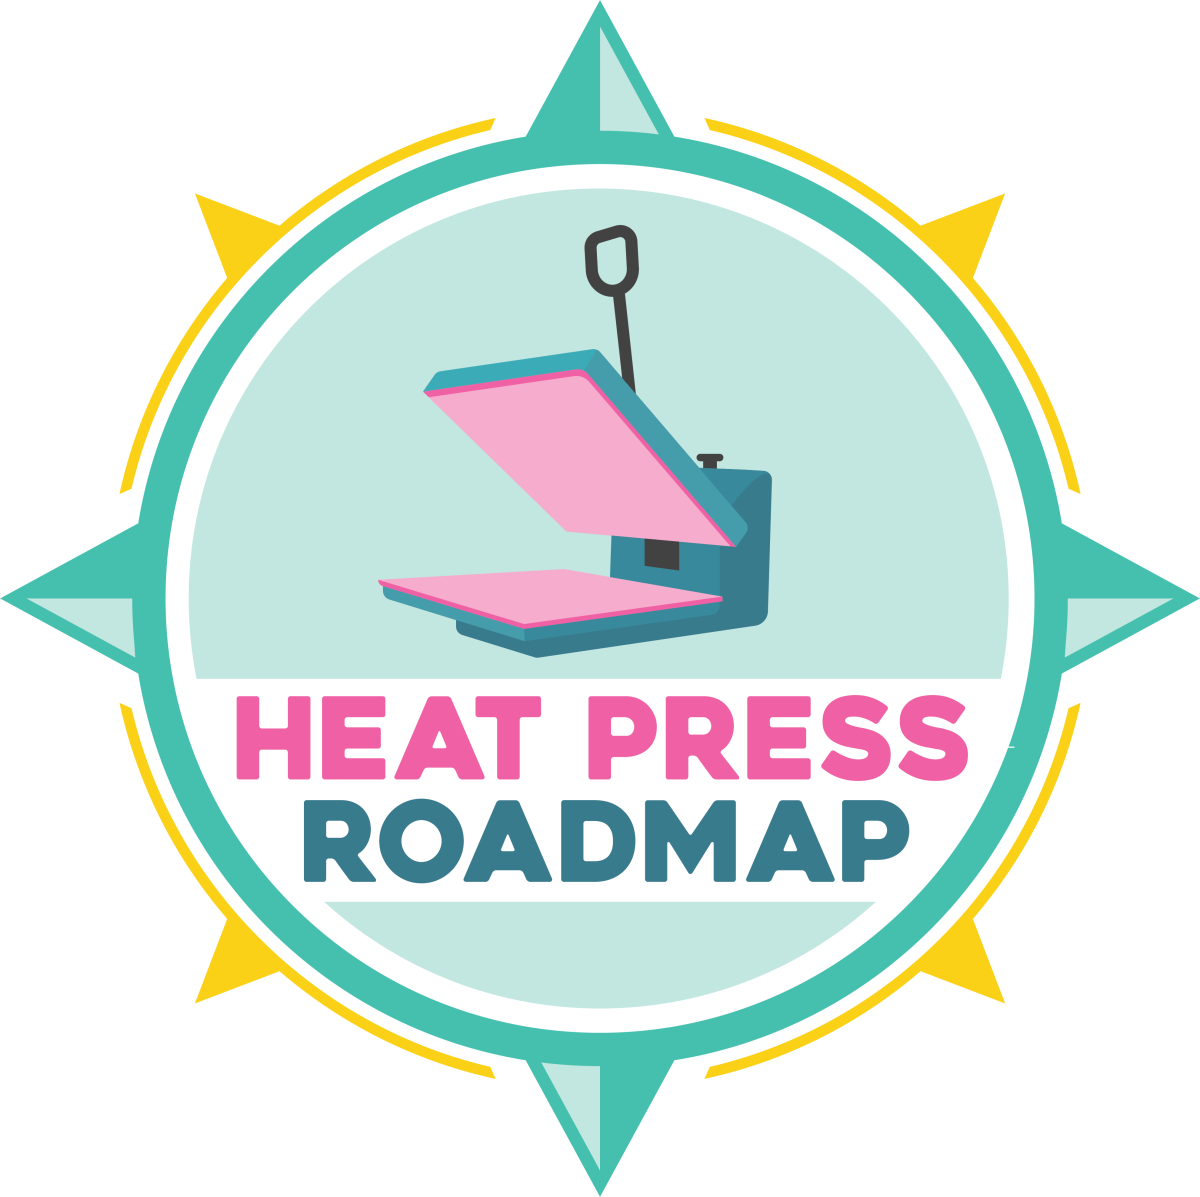 Round Heat Press Roadmap image